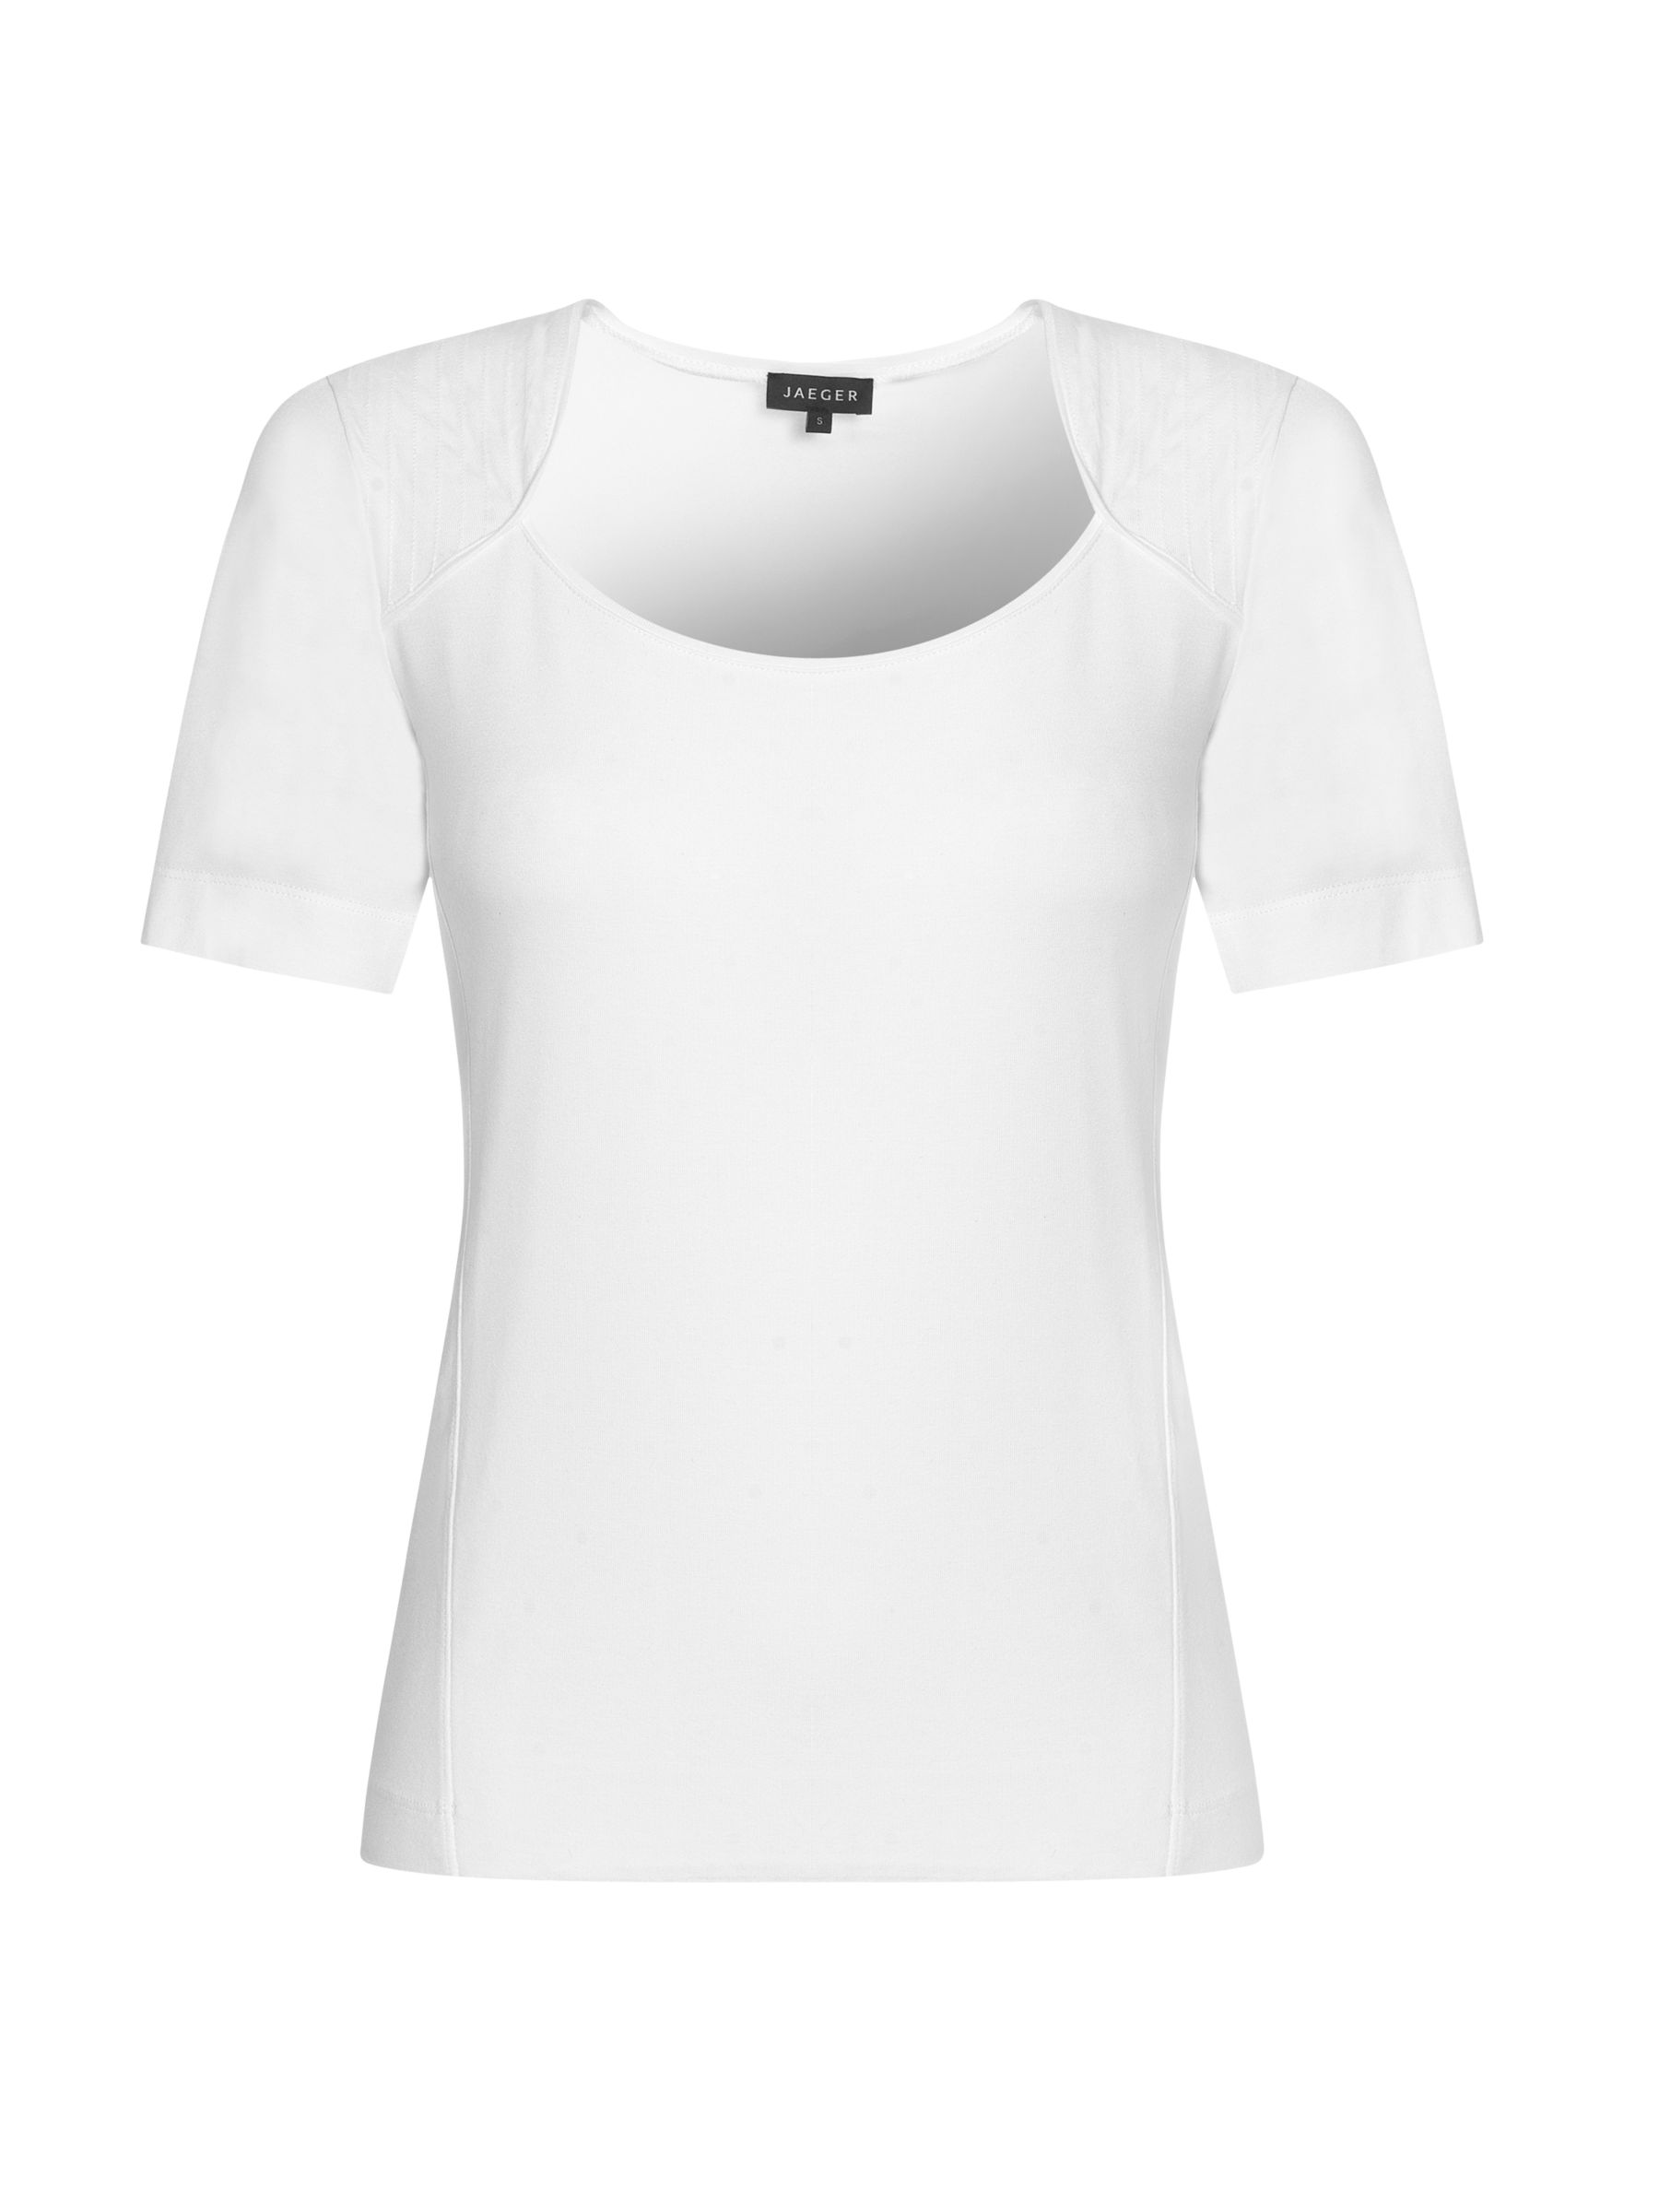 Jaeger Essential Plain Jersey T-Shirt, White